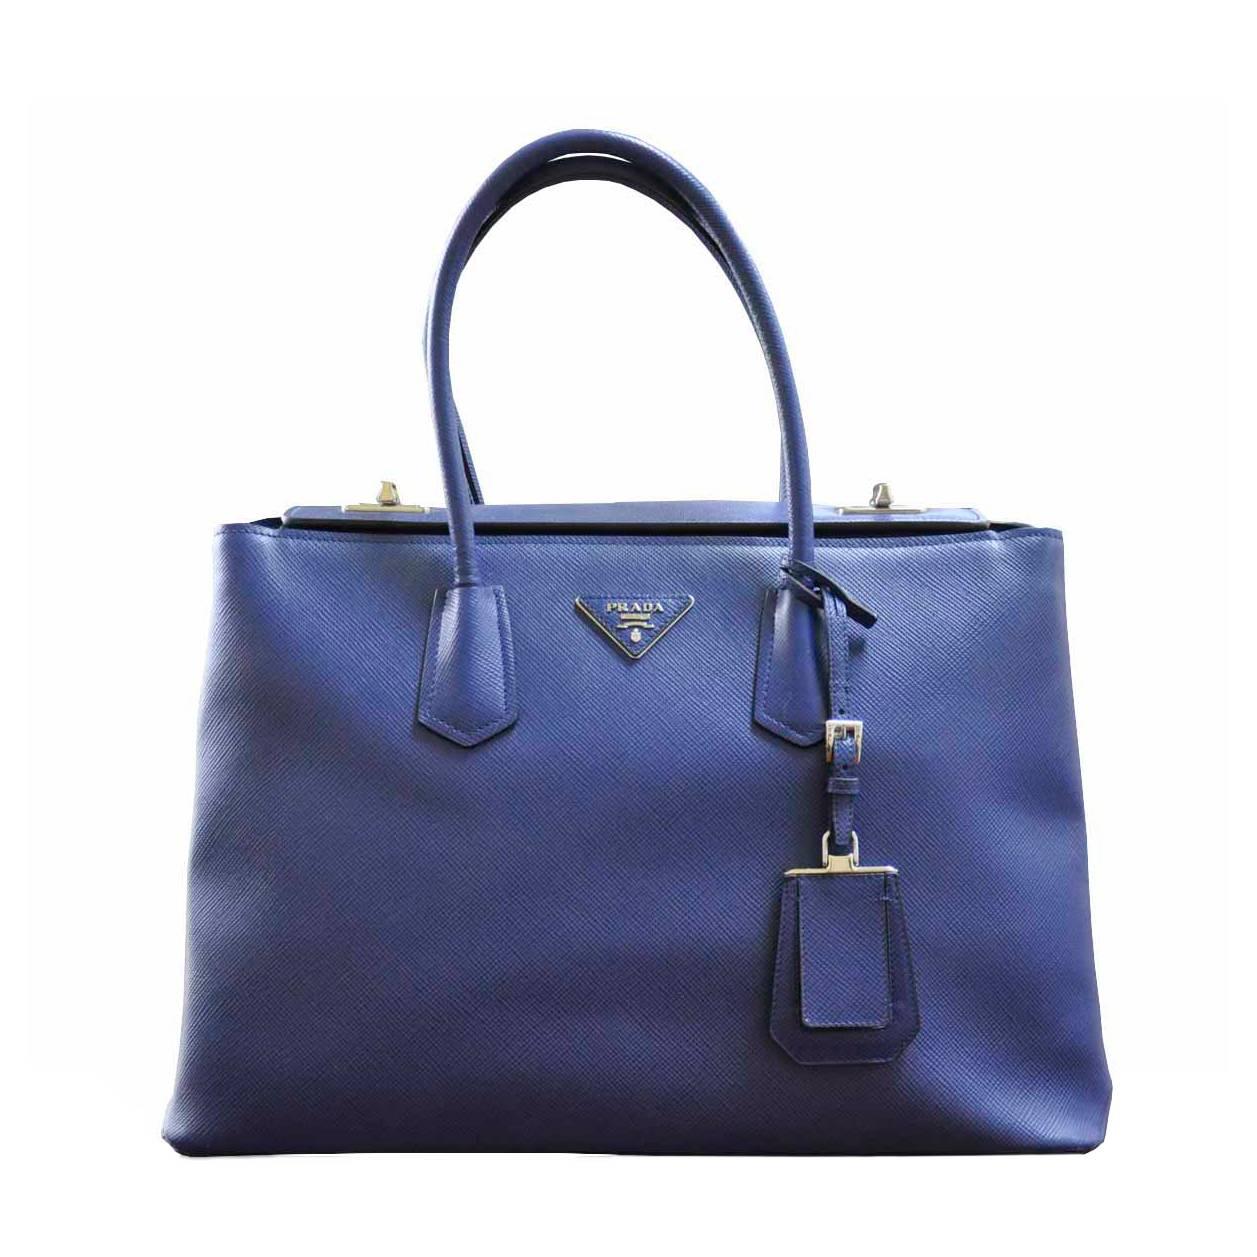 Prada Saffiano Cuir Twin Bag Blue Leather Tote Handbag